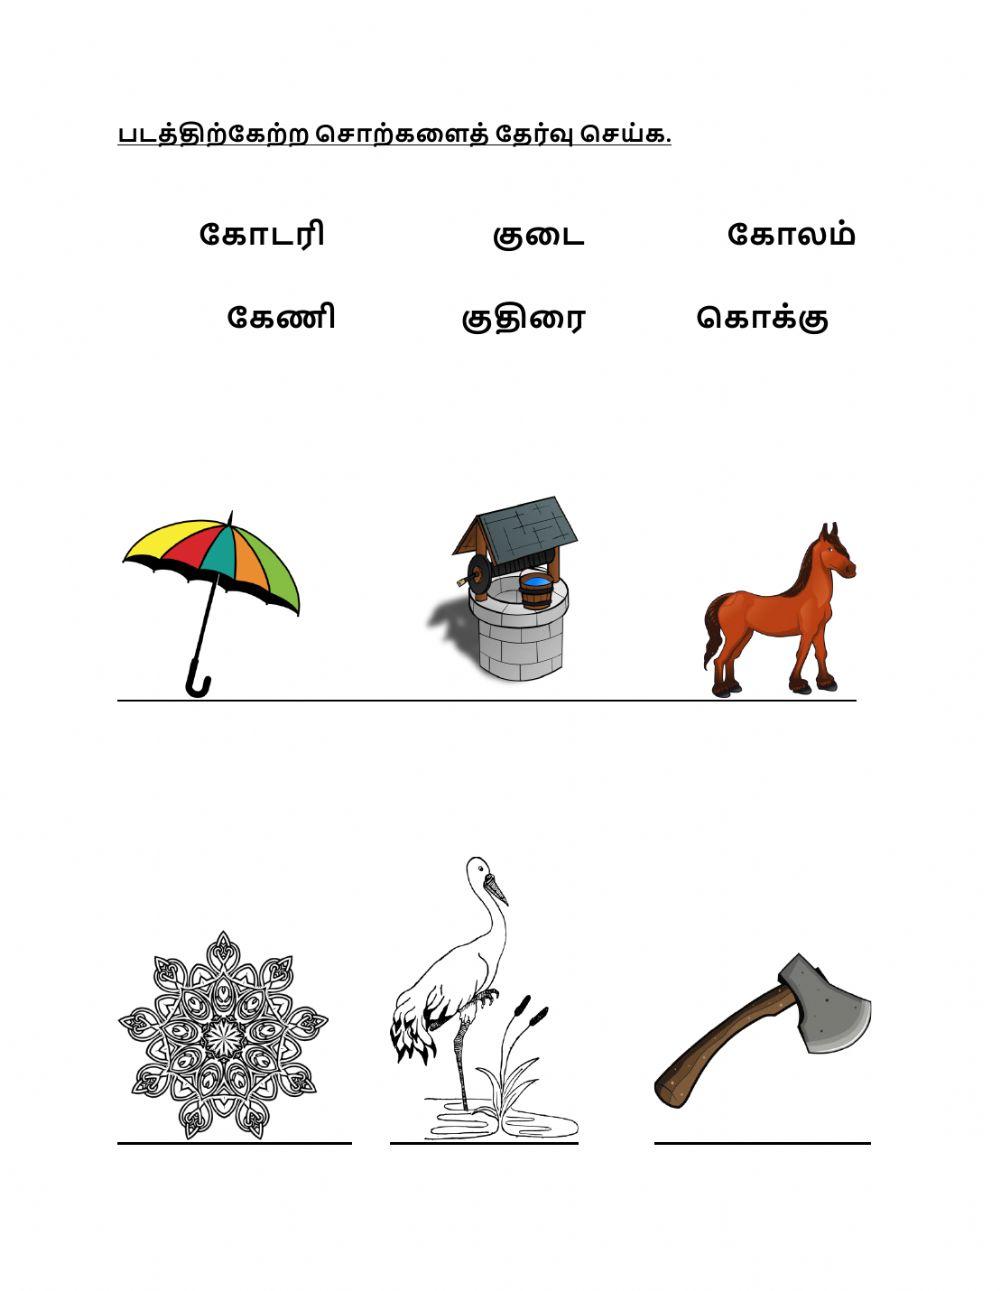 Tamil kavarisai kindergarten